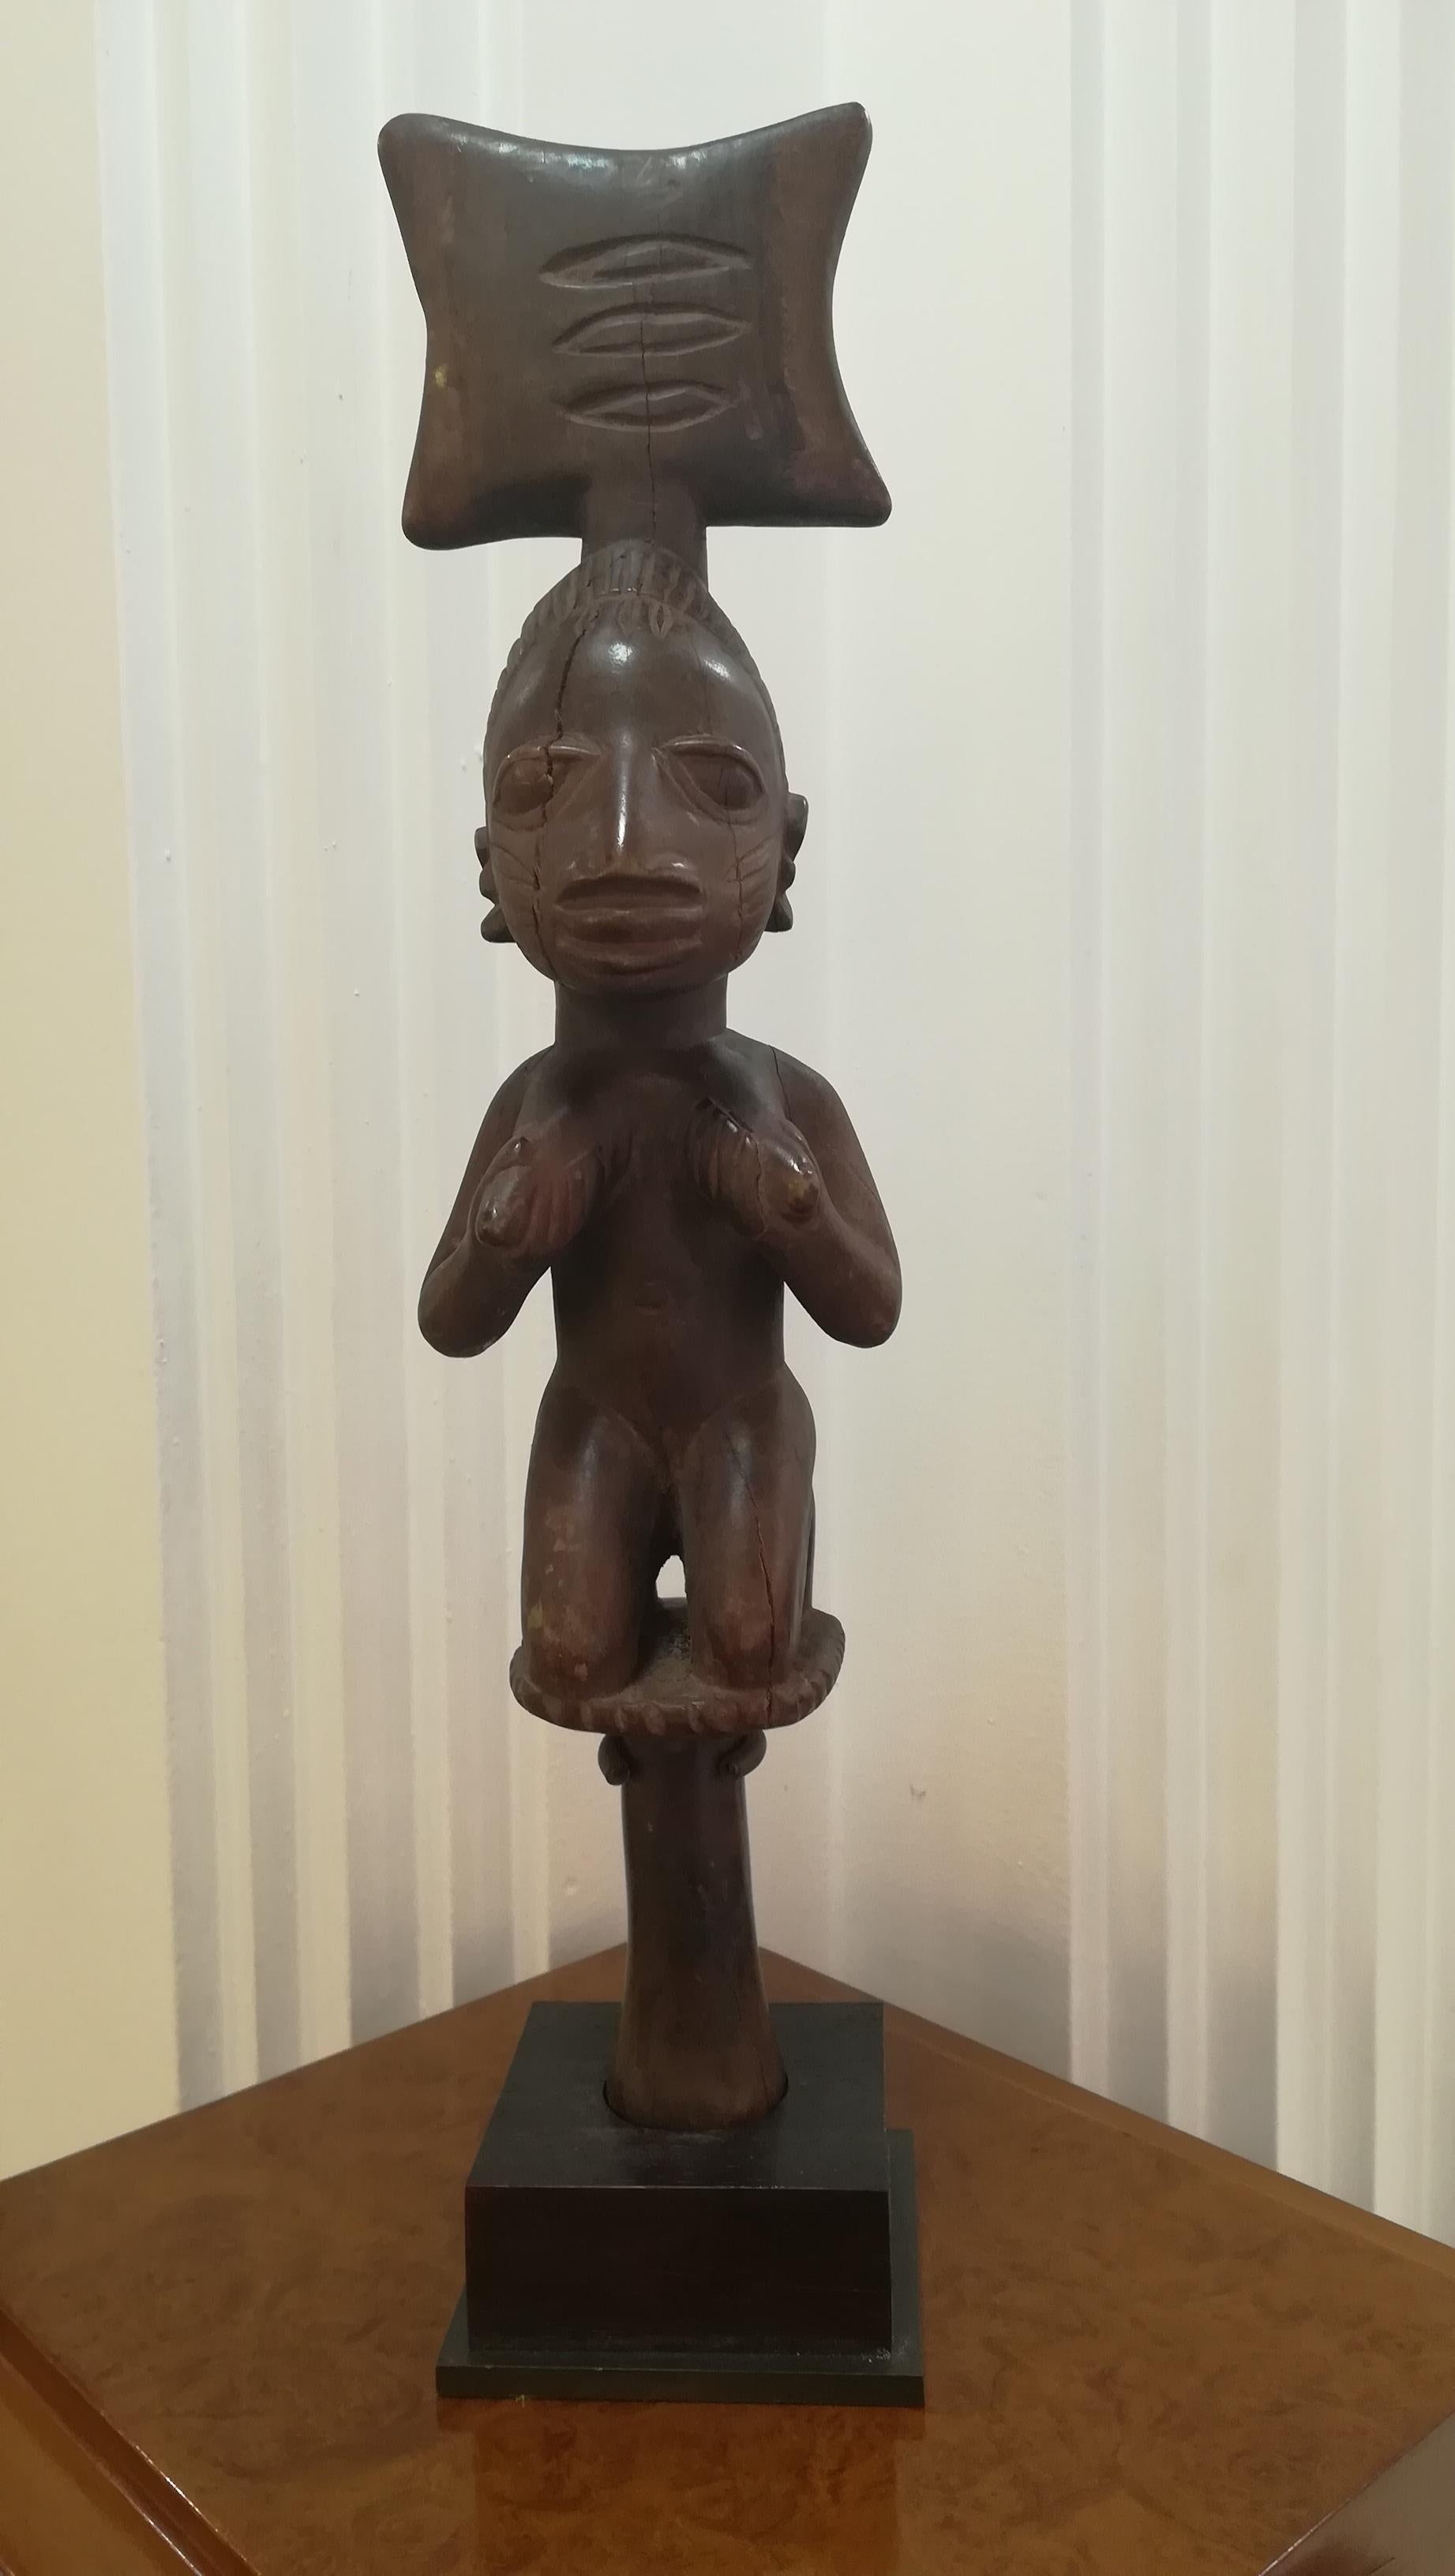 Yoruba Scepter, from Nigeria.
Provenance : 
Collection Claude Vérité
Collection Alain de Monbrison.